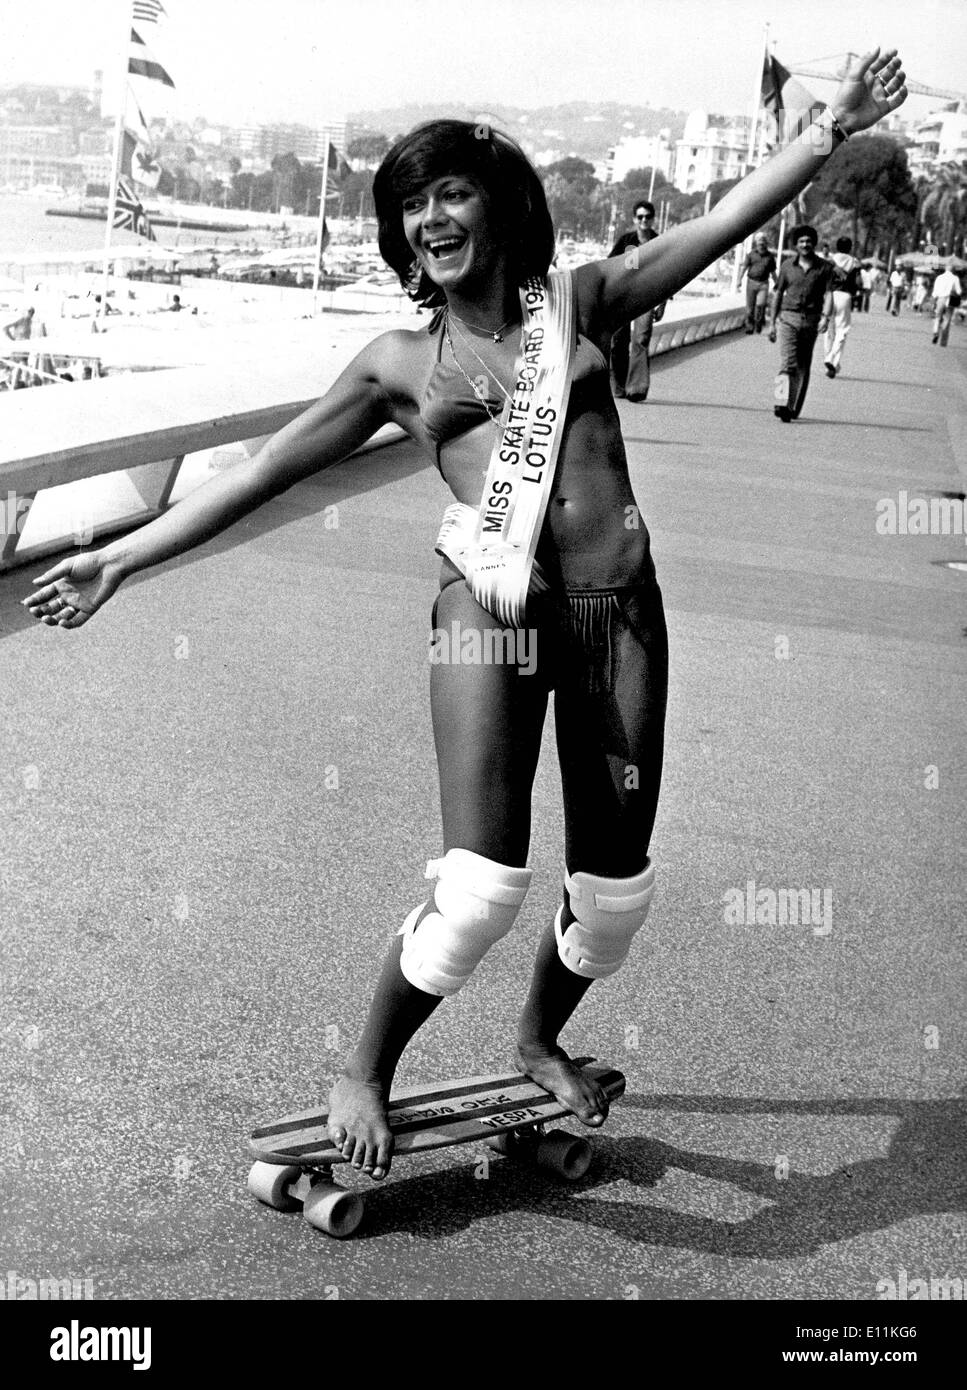 Sep 22, 1978; Cannes, France; Miss Skateboard 1978 JOLIE KATTY GREFFE seen deminstrating her skateboarding skills on the boardwalk of Cannes, France.. (Credit Image: KEYSTONE Pictures USA/ZUMAPRESS.com) Stock Photo